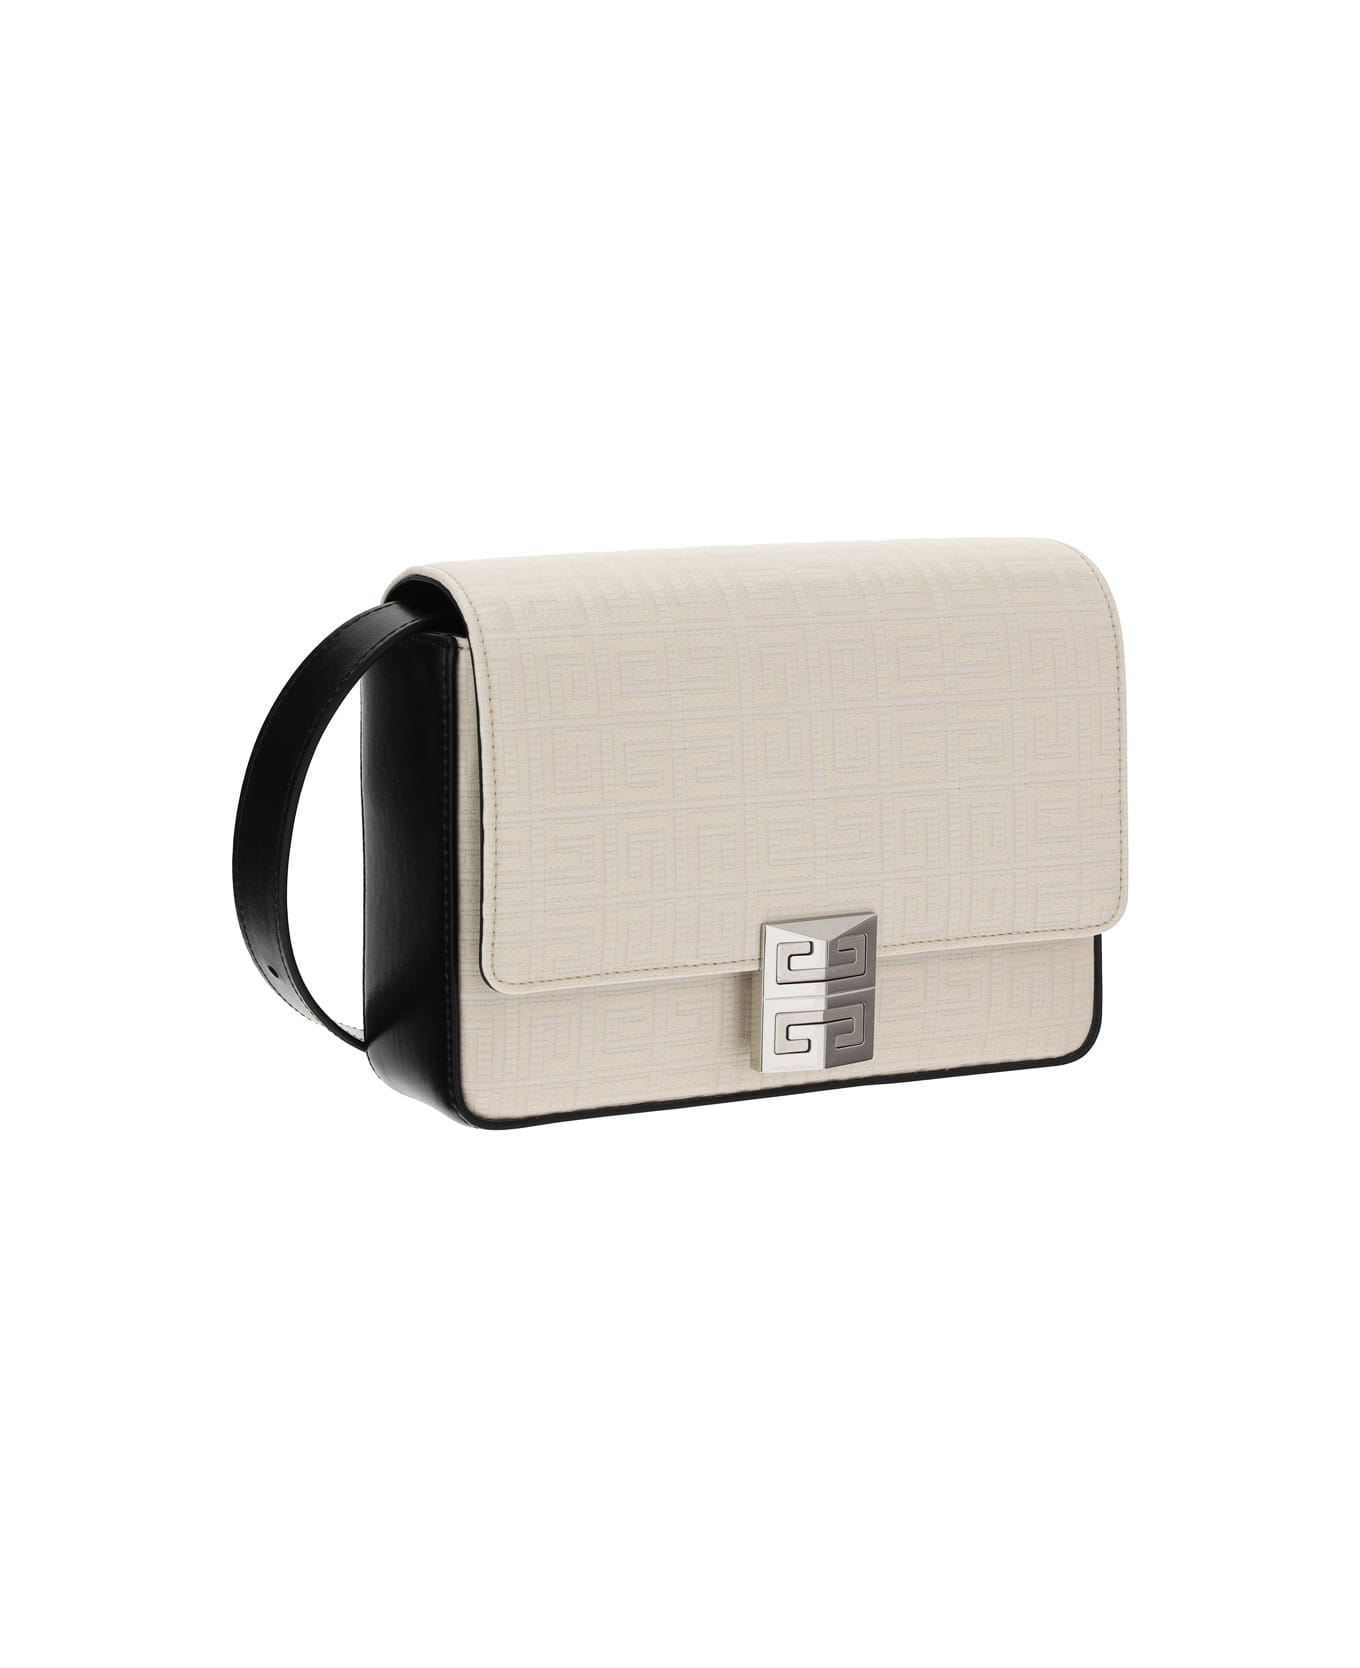 Givenchy 4g Medium Bag - Ivory